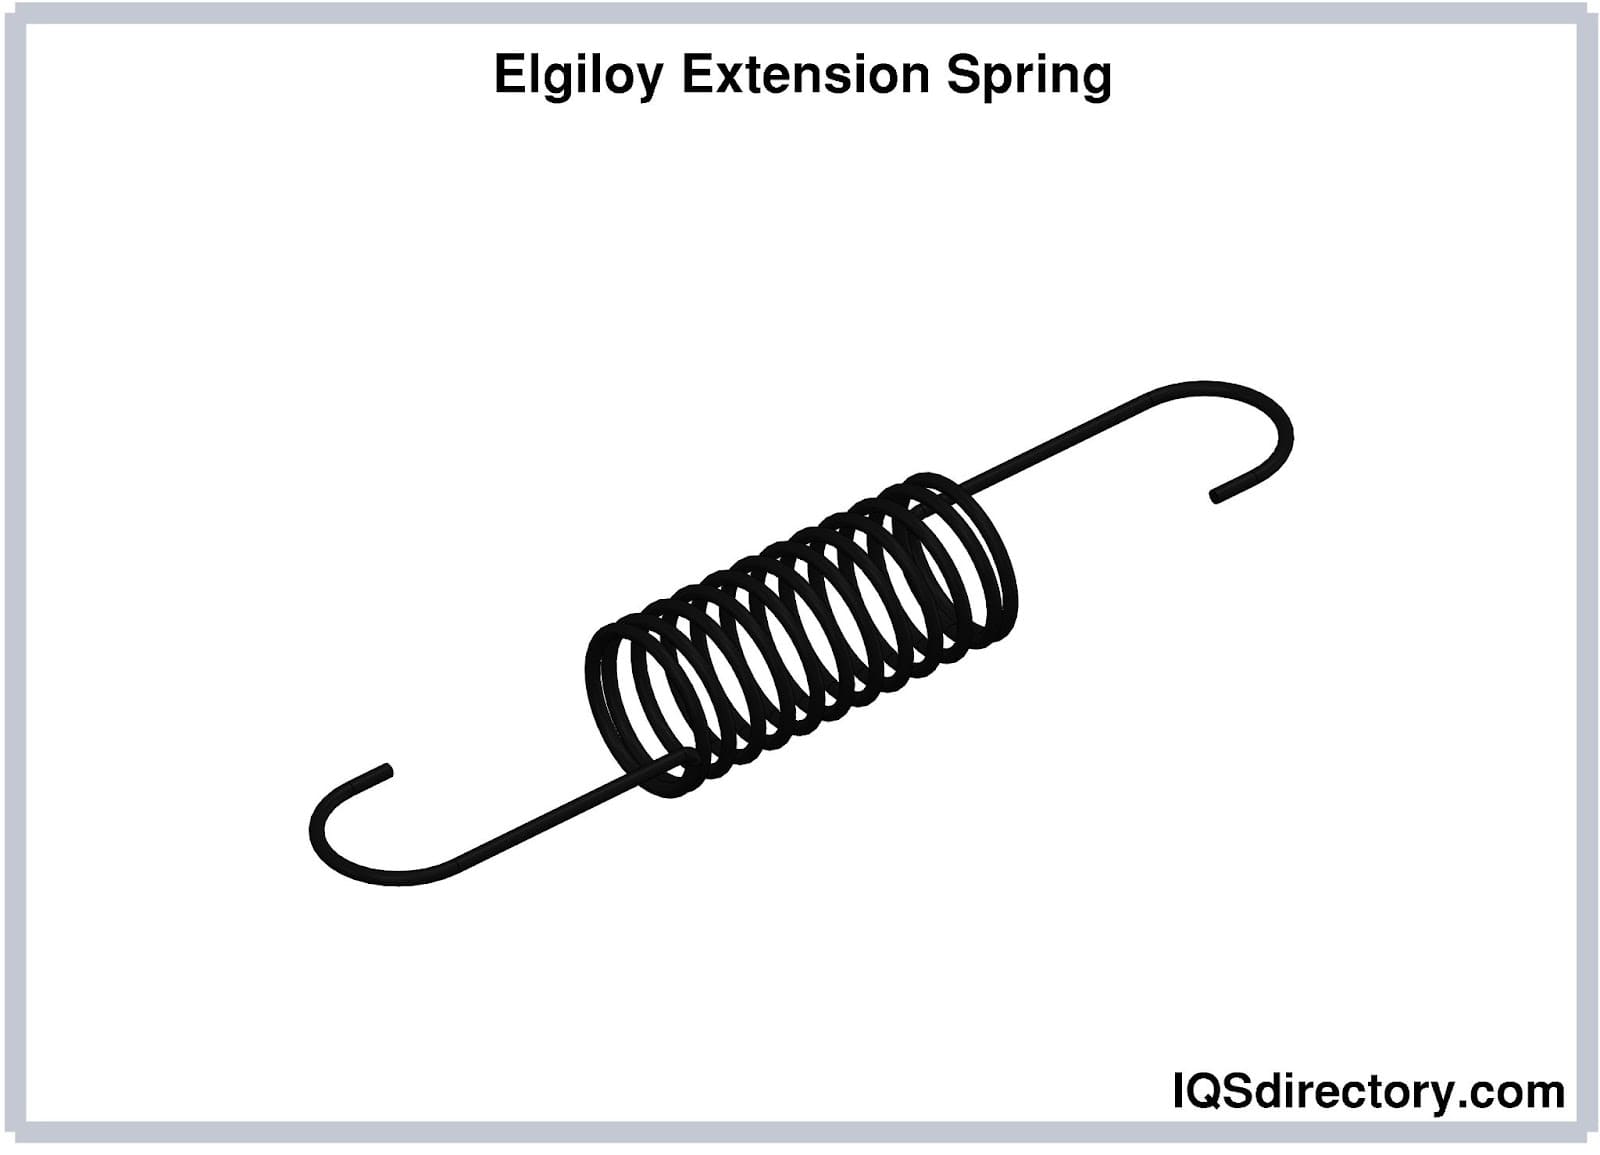 Eigiloy Extension Spring